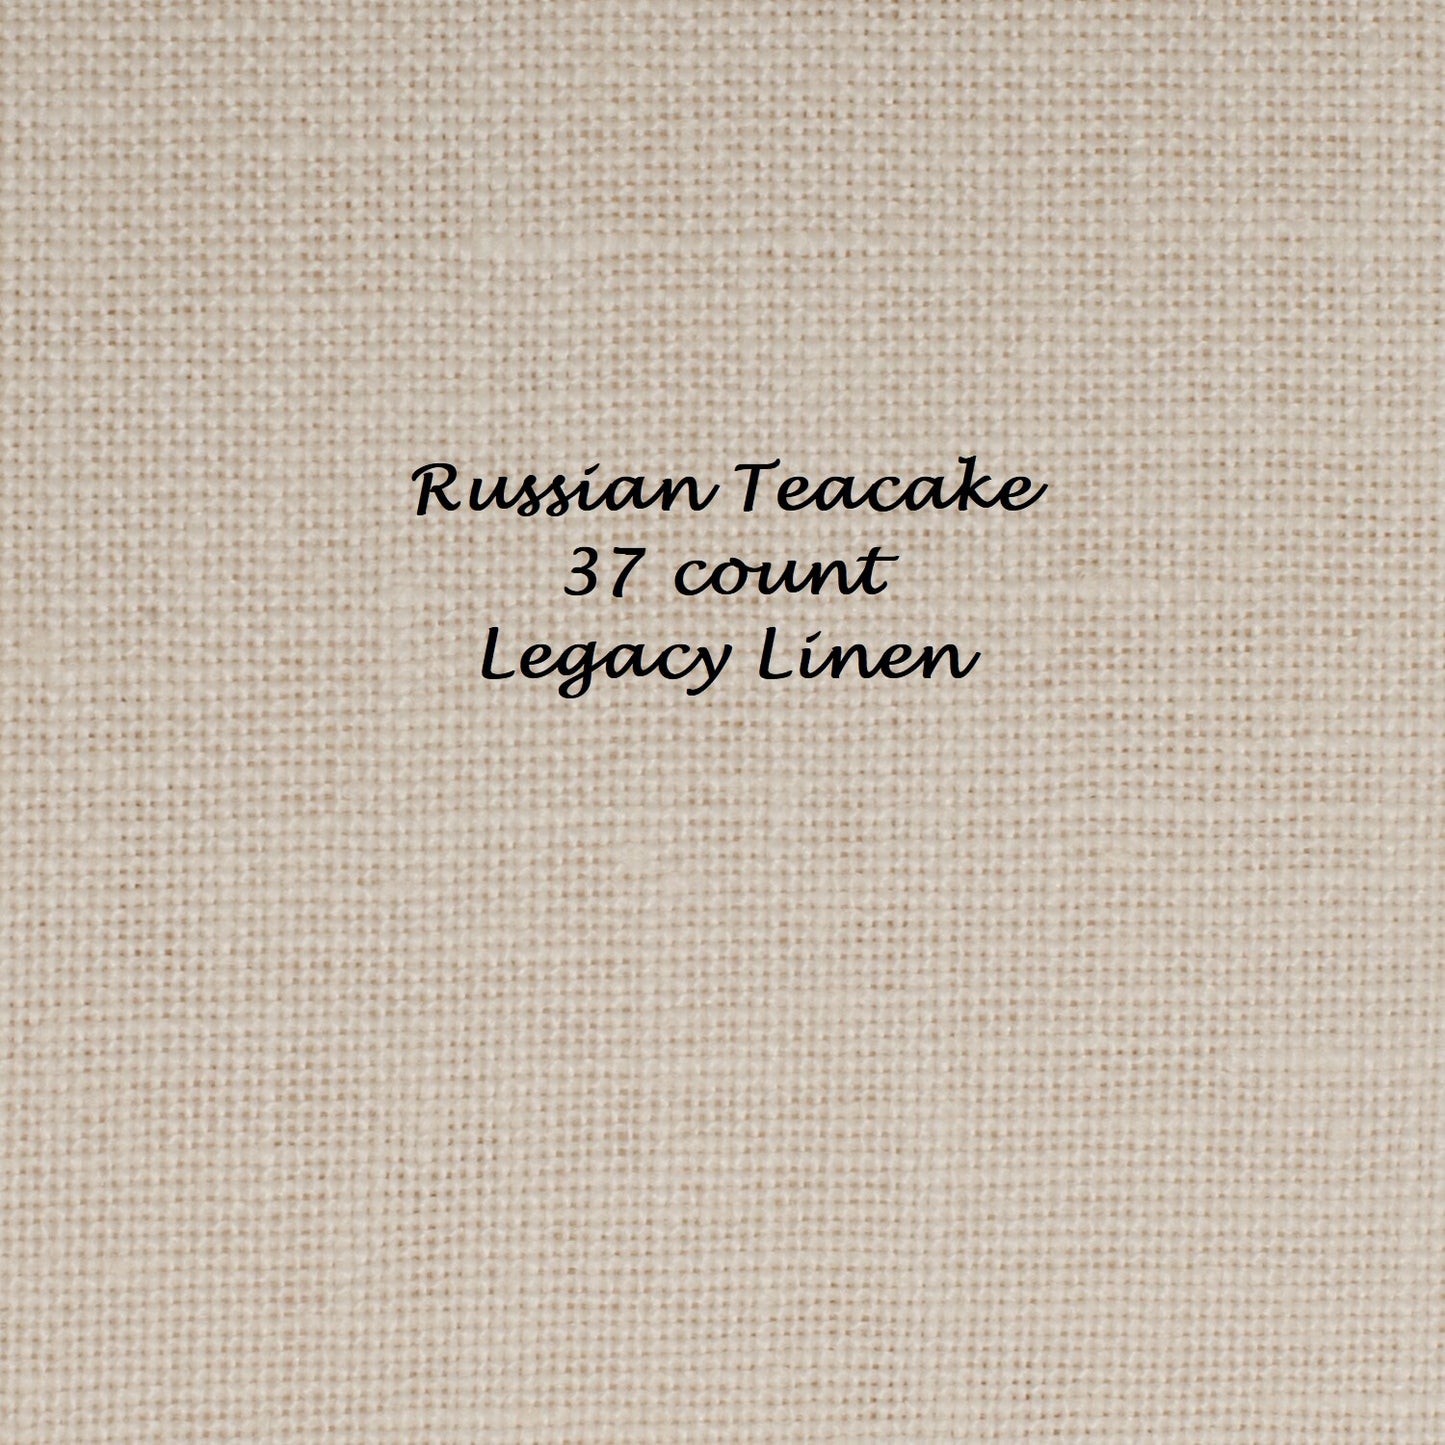 37 count Legacy Linen - Russian Teacake